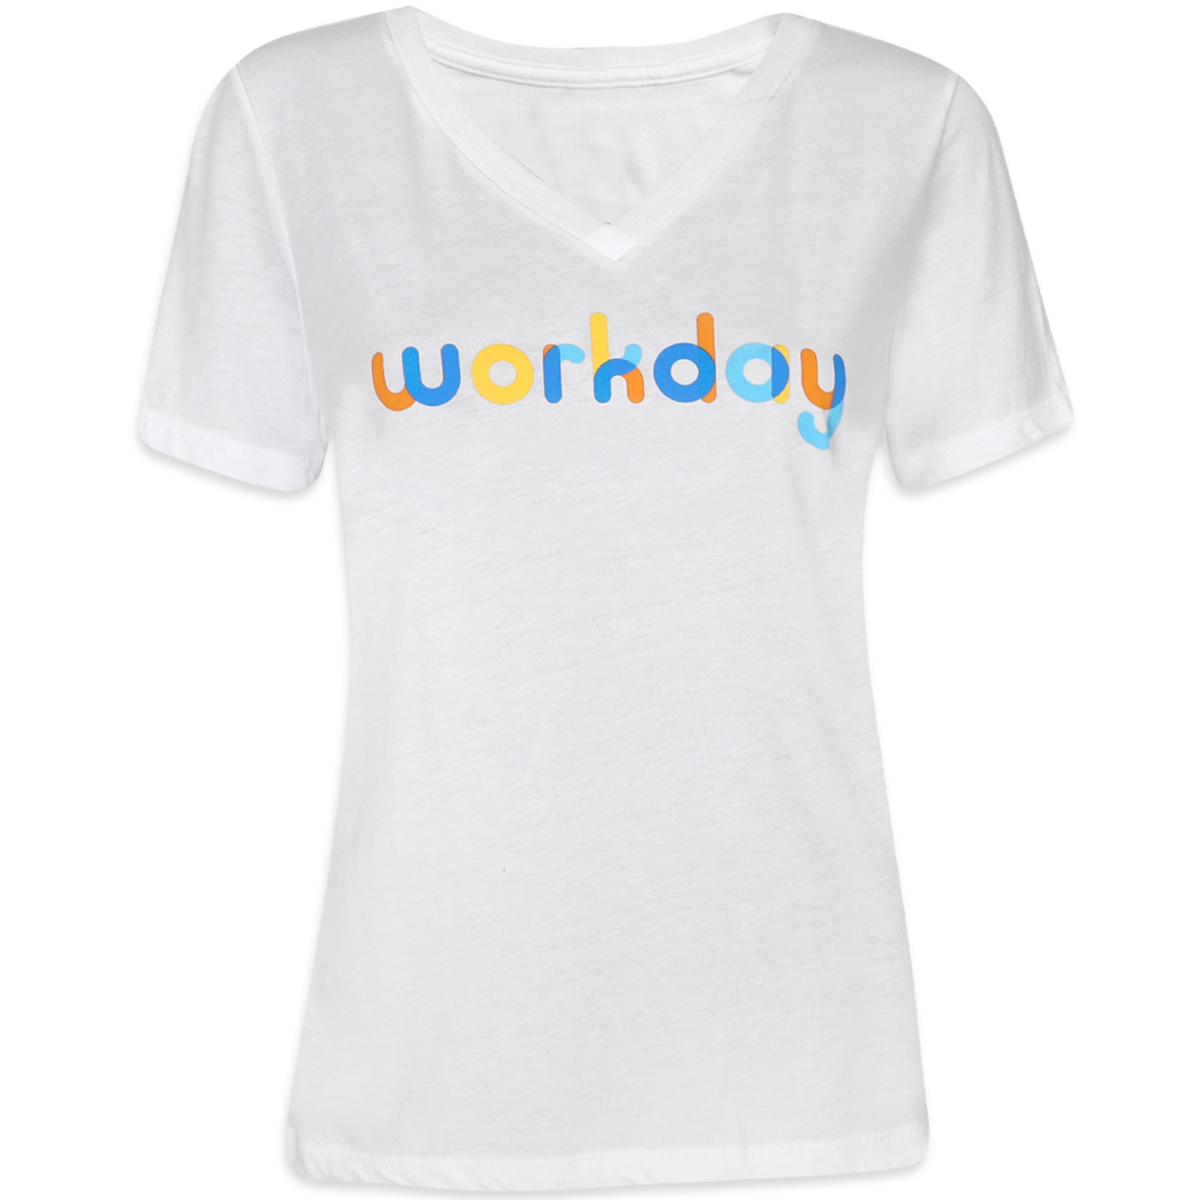 Ladies Workday Colorblast T-shirt